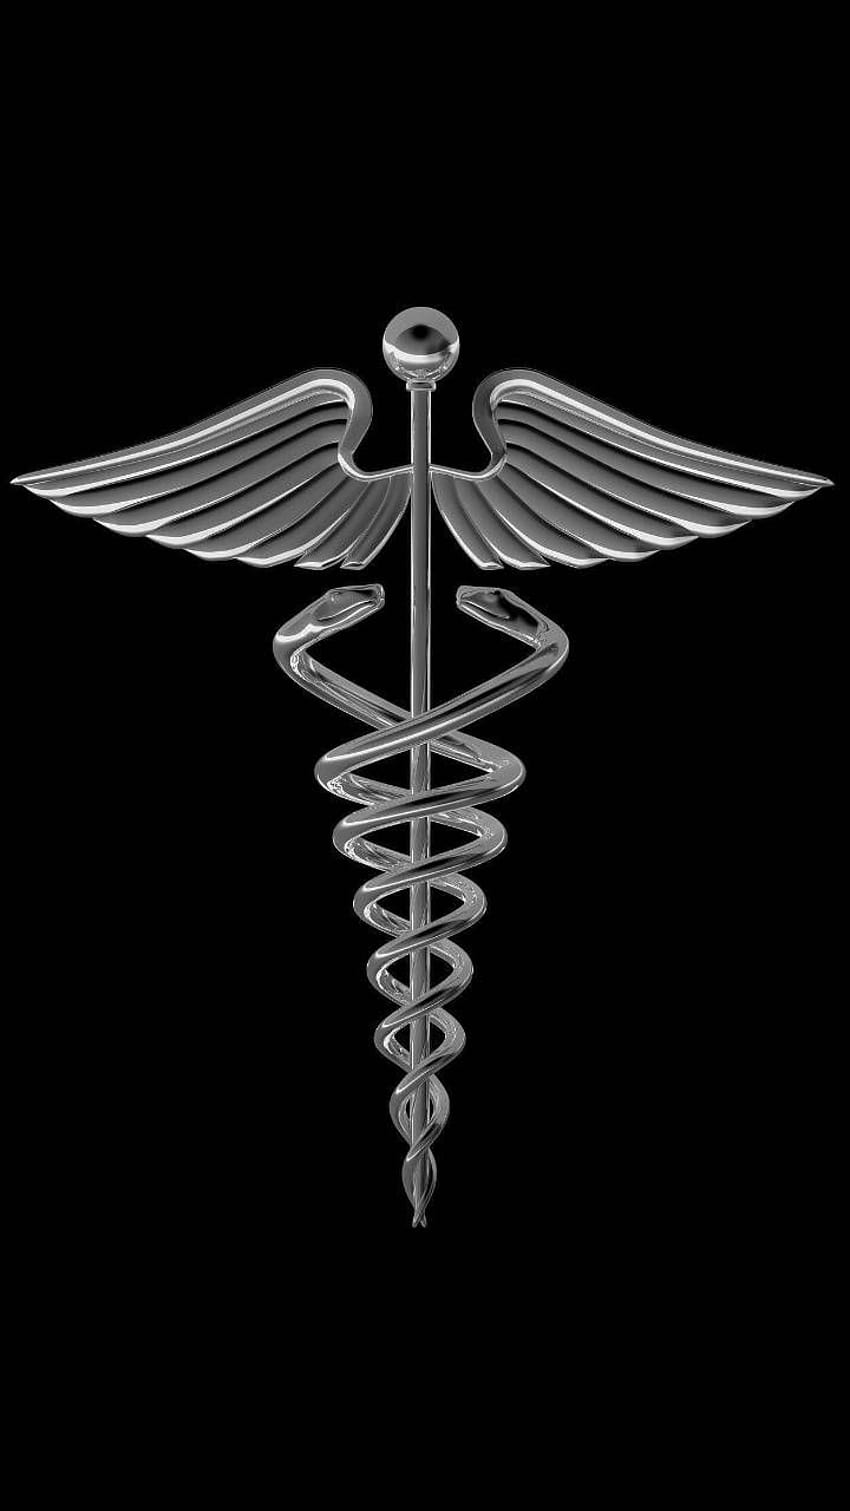 Download Professional Medical Doctor Logo Wallpaper | Wallpapers.com